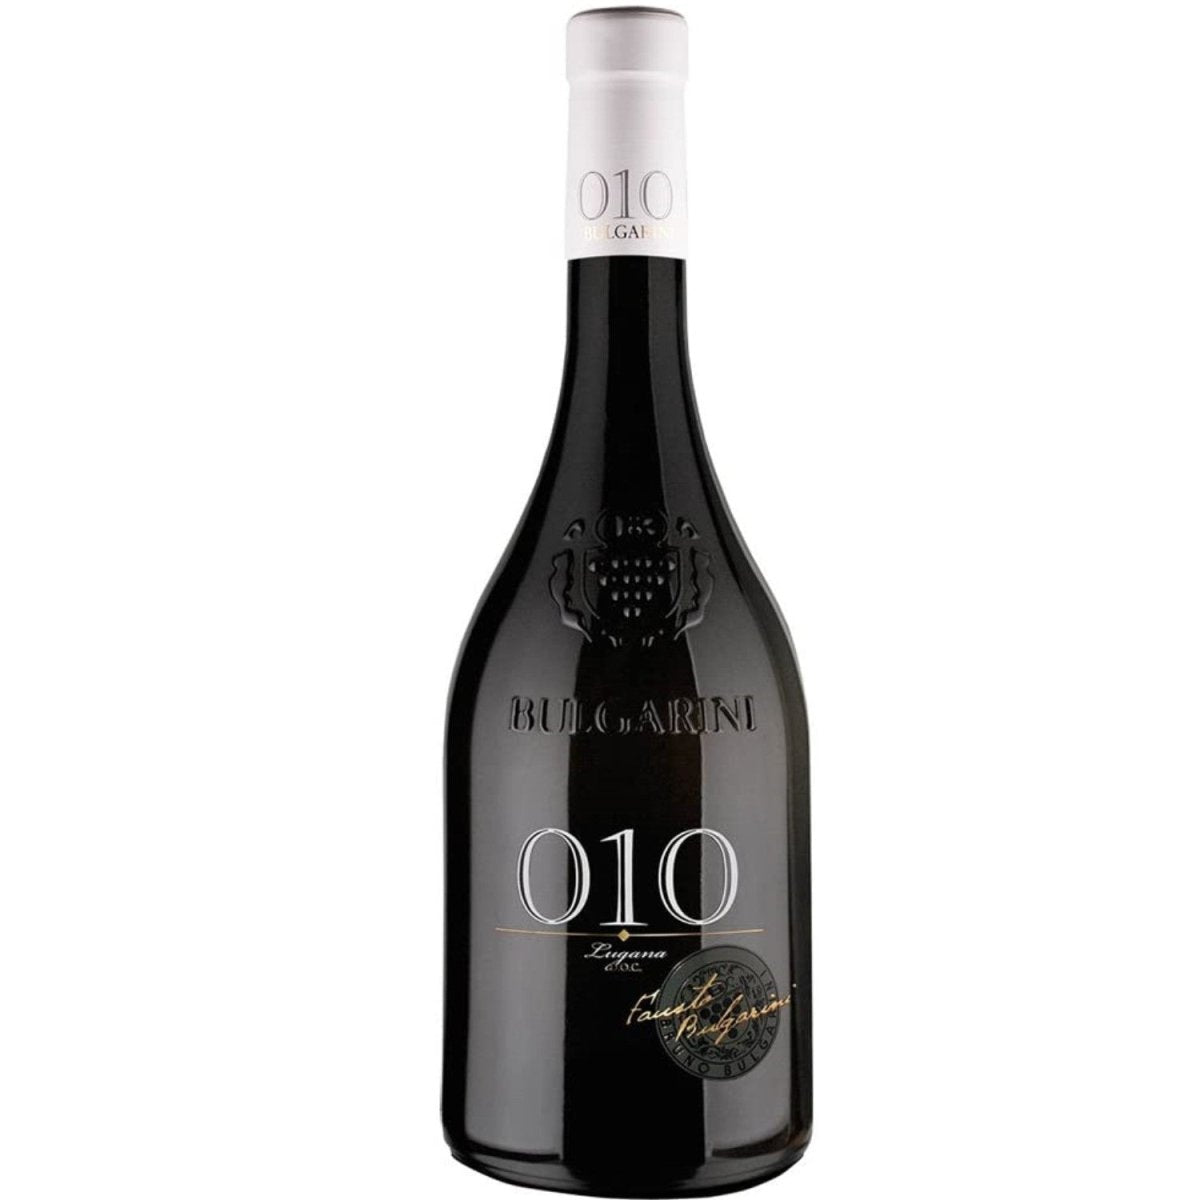 Cantina Bulgarini 010 Lugana DOC Weißwein Wein trocken Italien (12 x 0.75l) - Versanel -